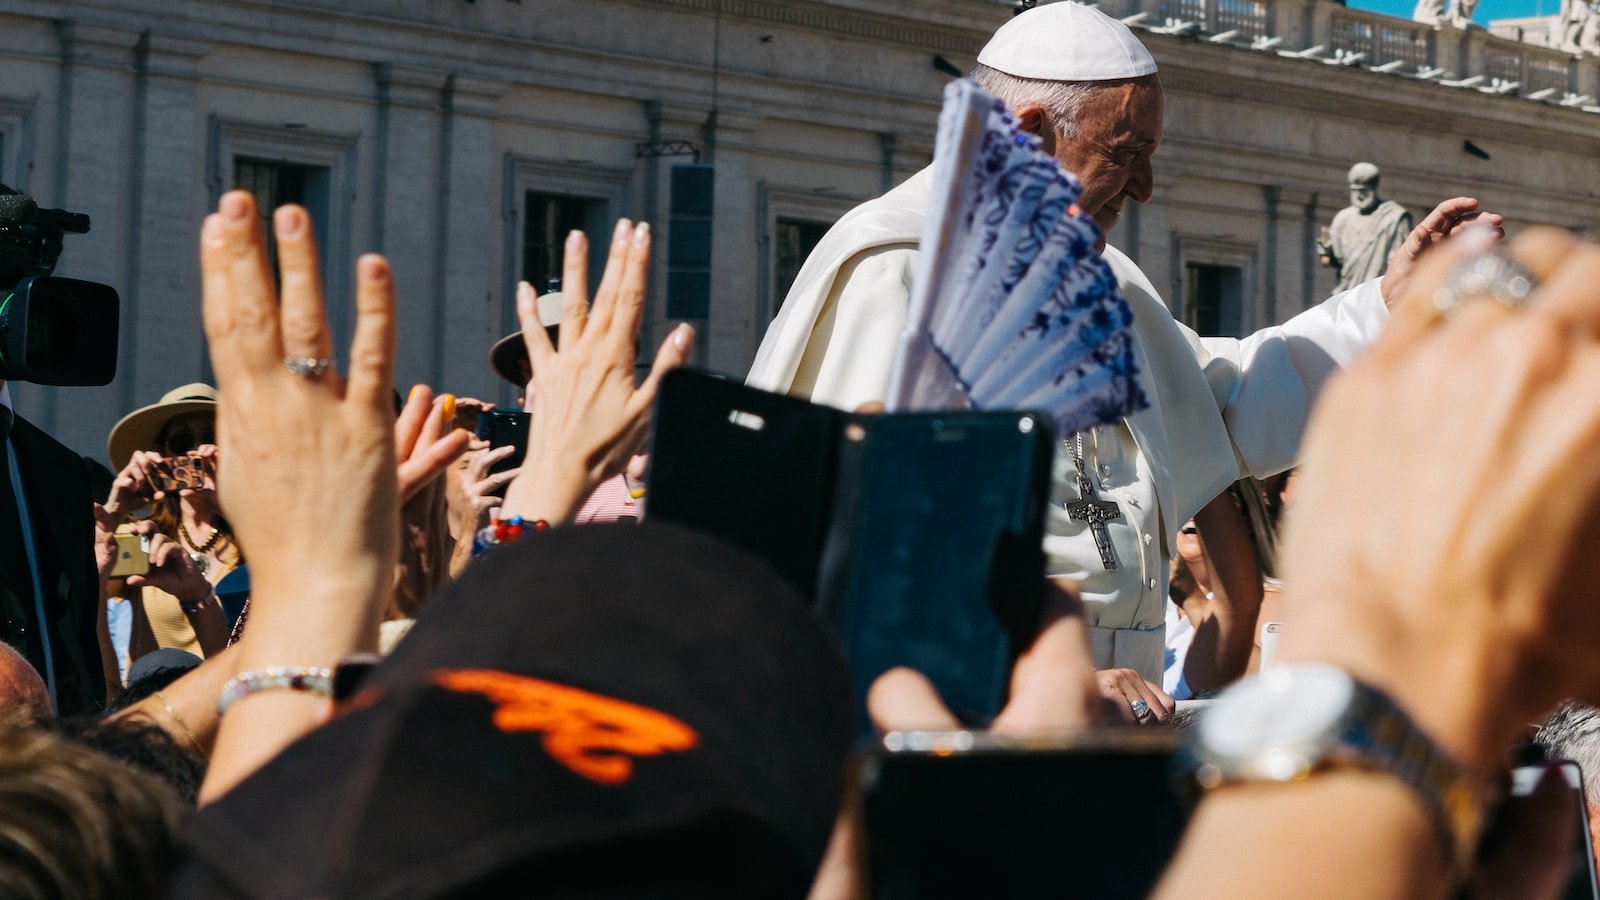 Pope John Paul II: A Polish Icon and His Legacy